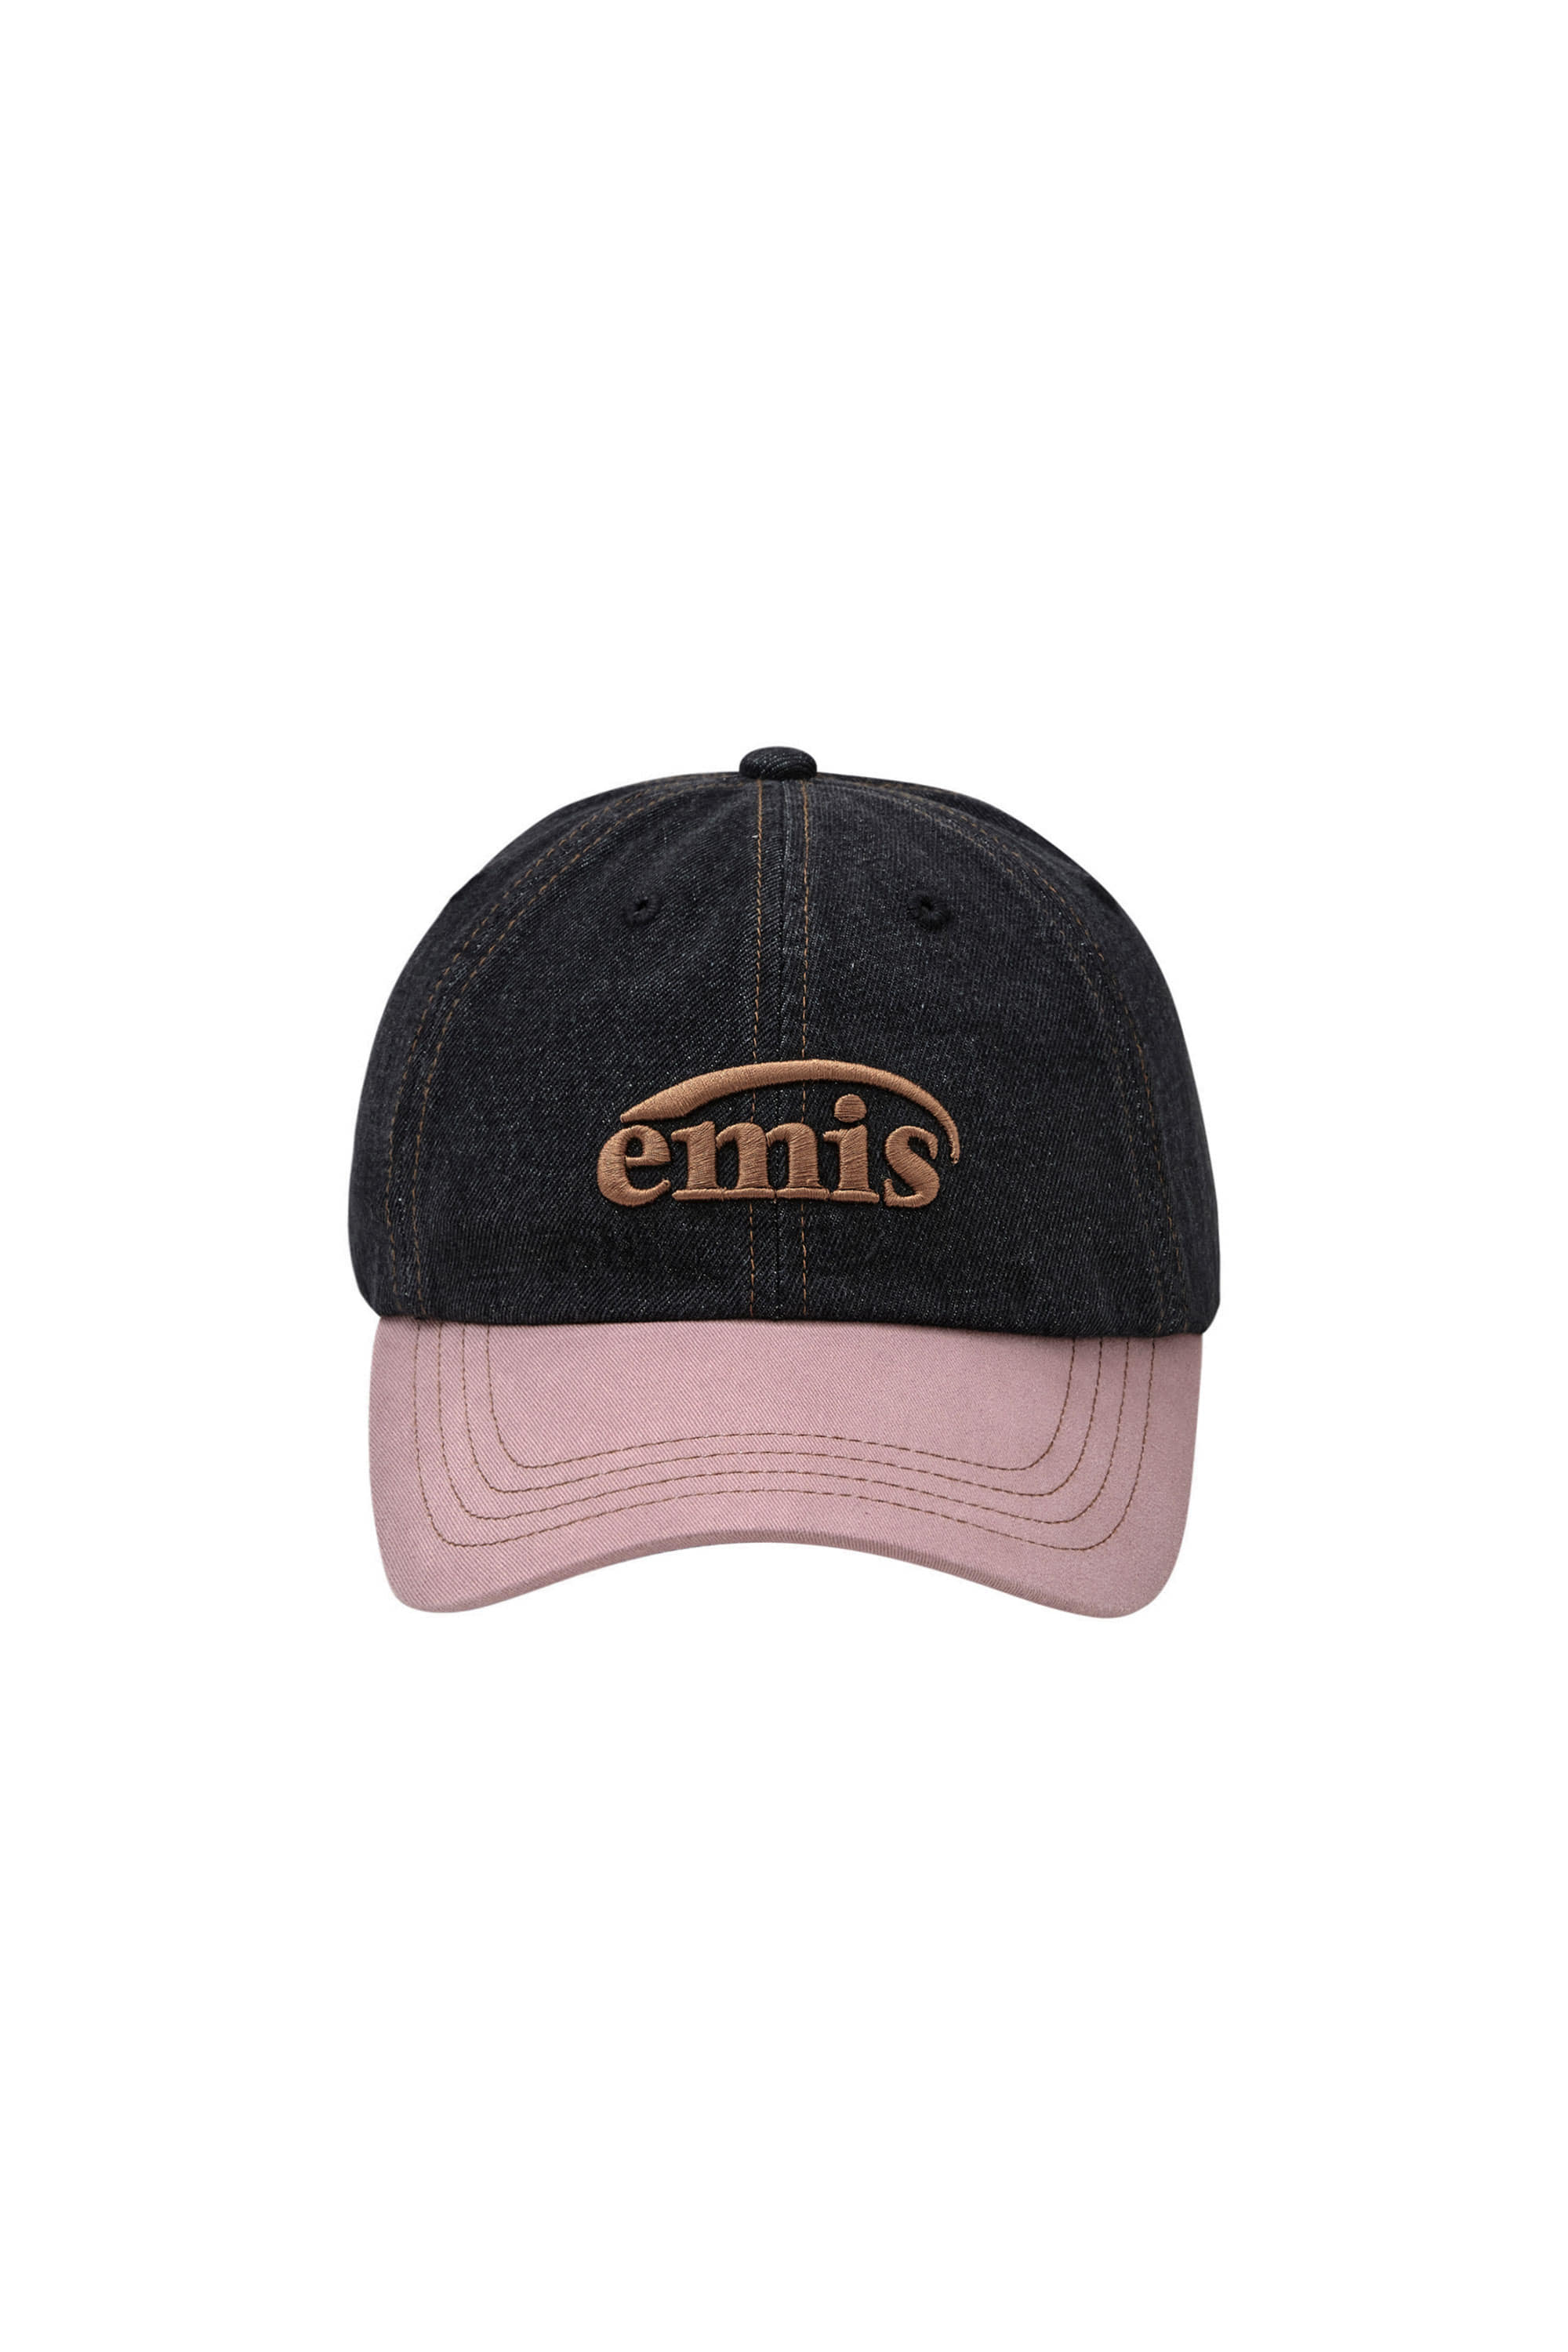 IN STOCK】EMIS WASHED DENIM BALL CAP-GRAY/PINK – SeoulSeoul